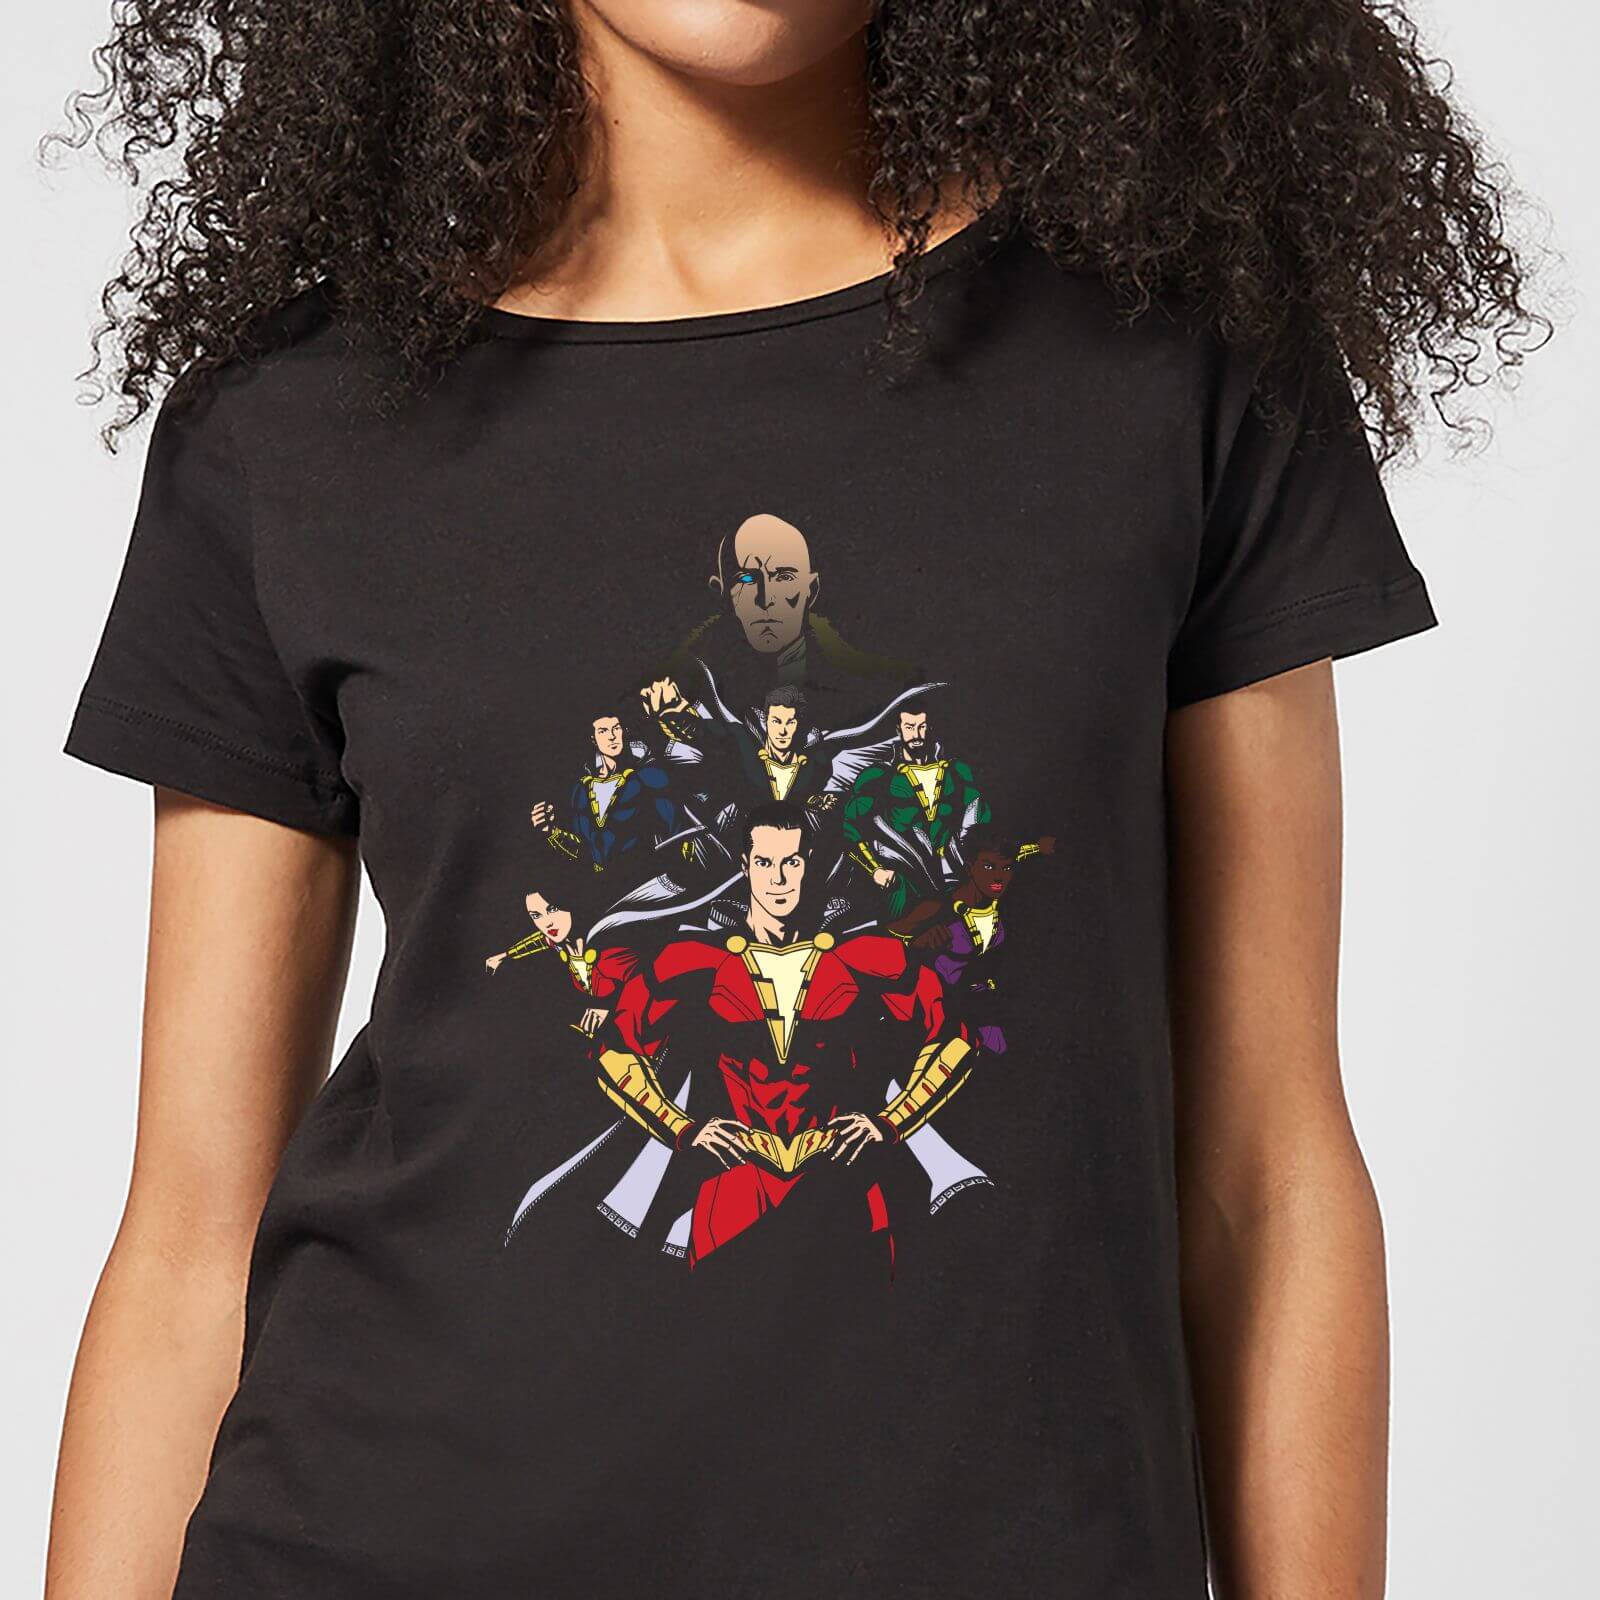 Shazam Team Up Women's T-Shirt - Black - S - Black